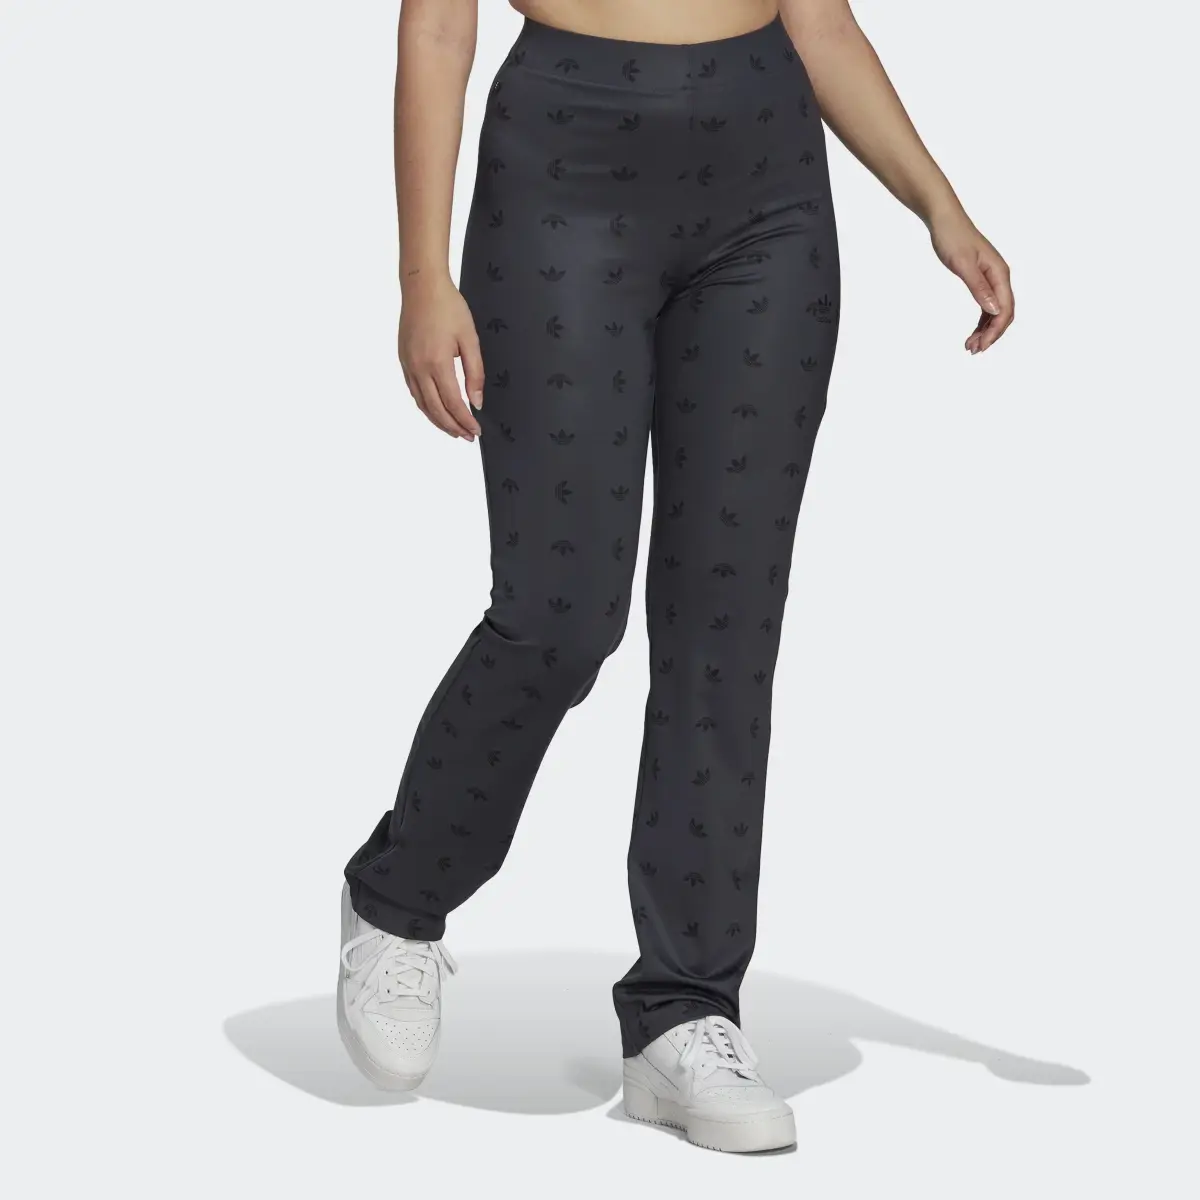 Adidas Stretchy Allover Print Pants. 1